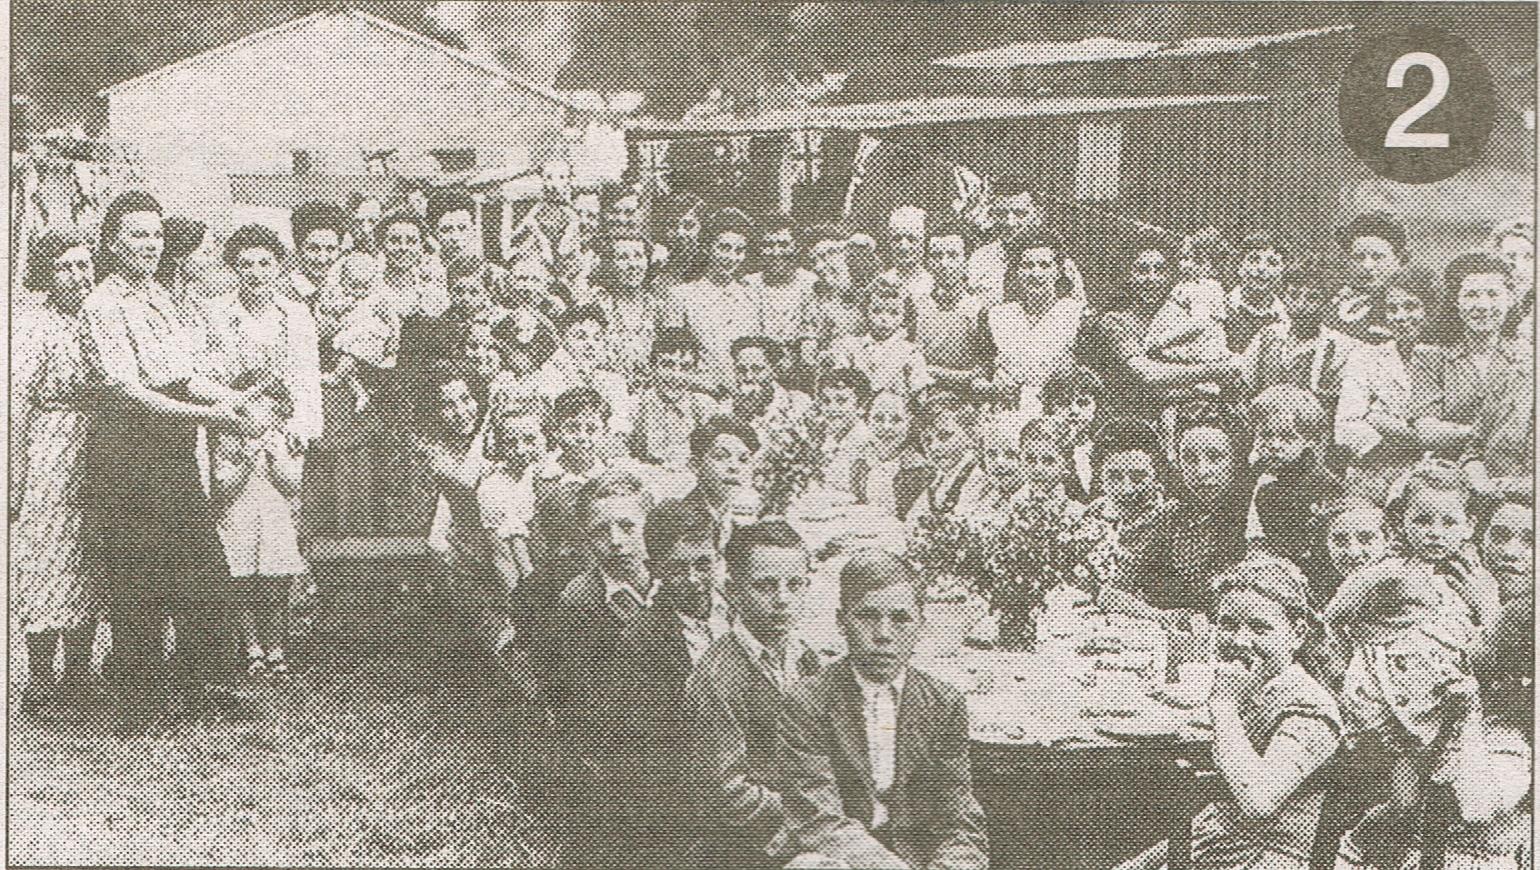 Children’s tea party, 1940, Whitbread’s hop farm, Beltring, Kent  .jpg